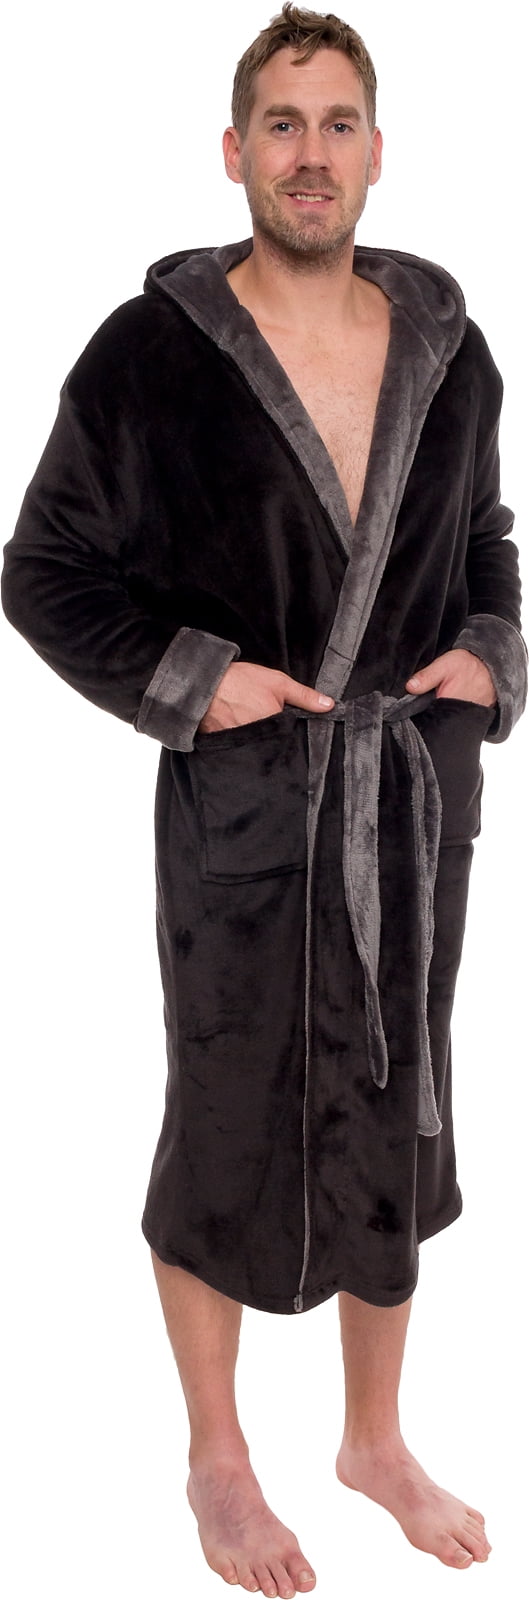 ThePass Mens Bathrobe Plush Lengthened Hooded Home Clothes Long Sleeved Robe